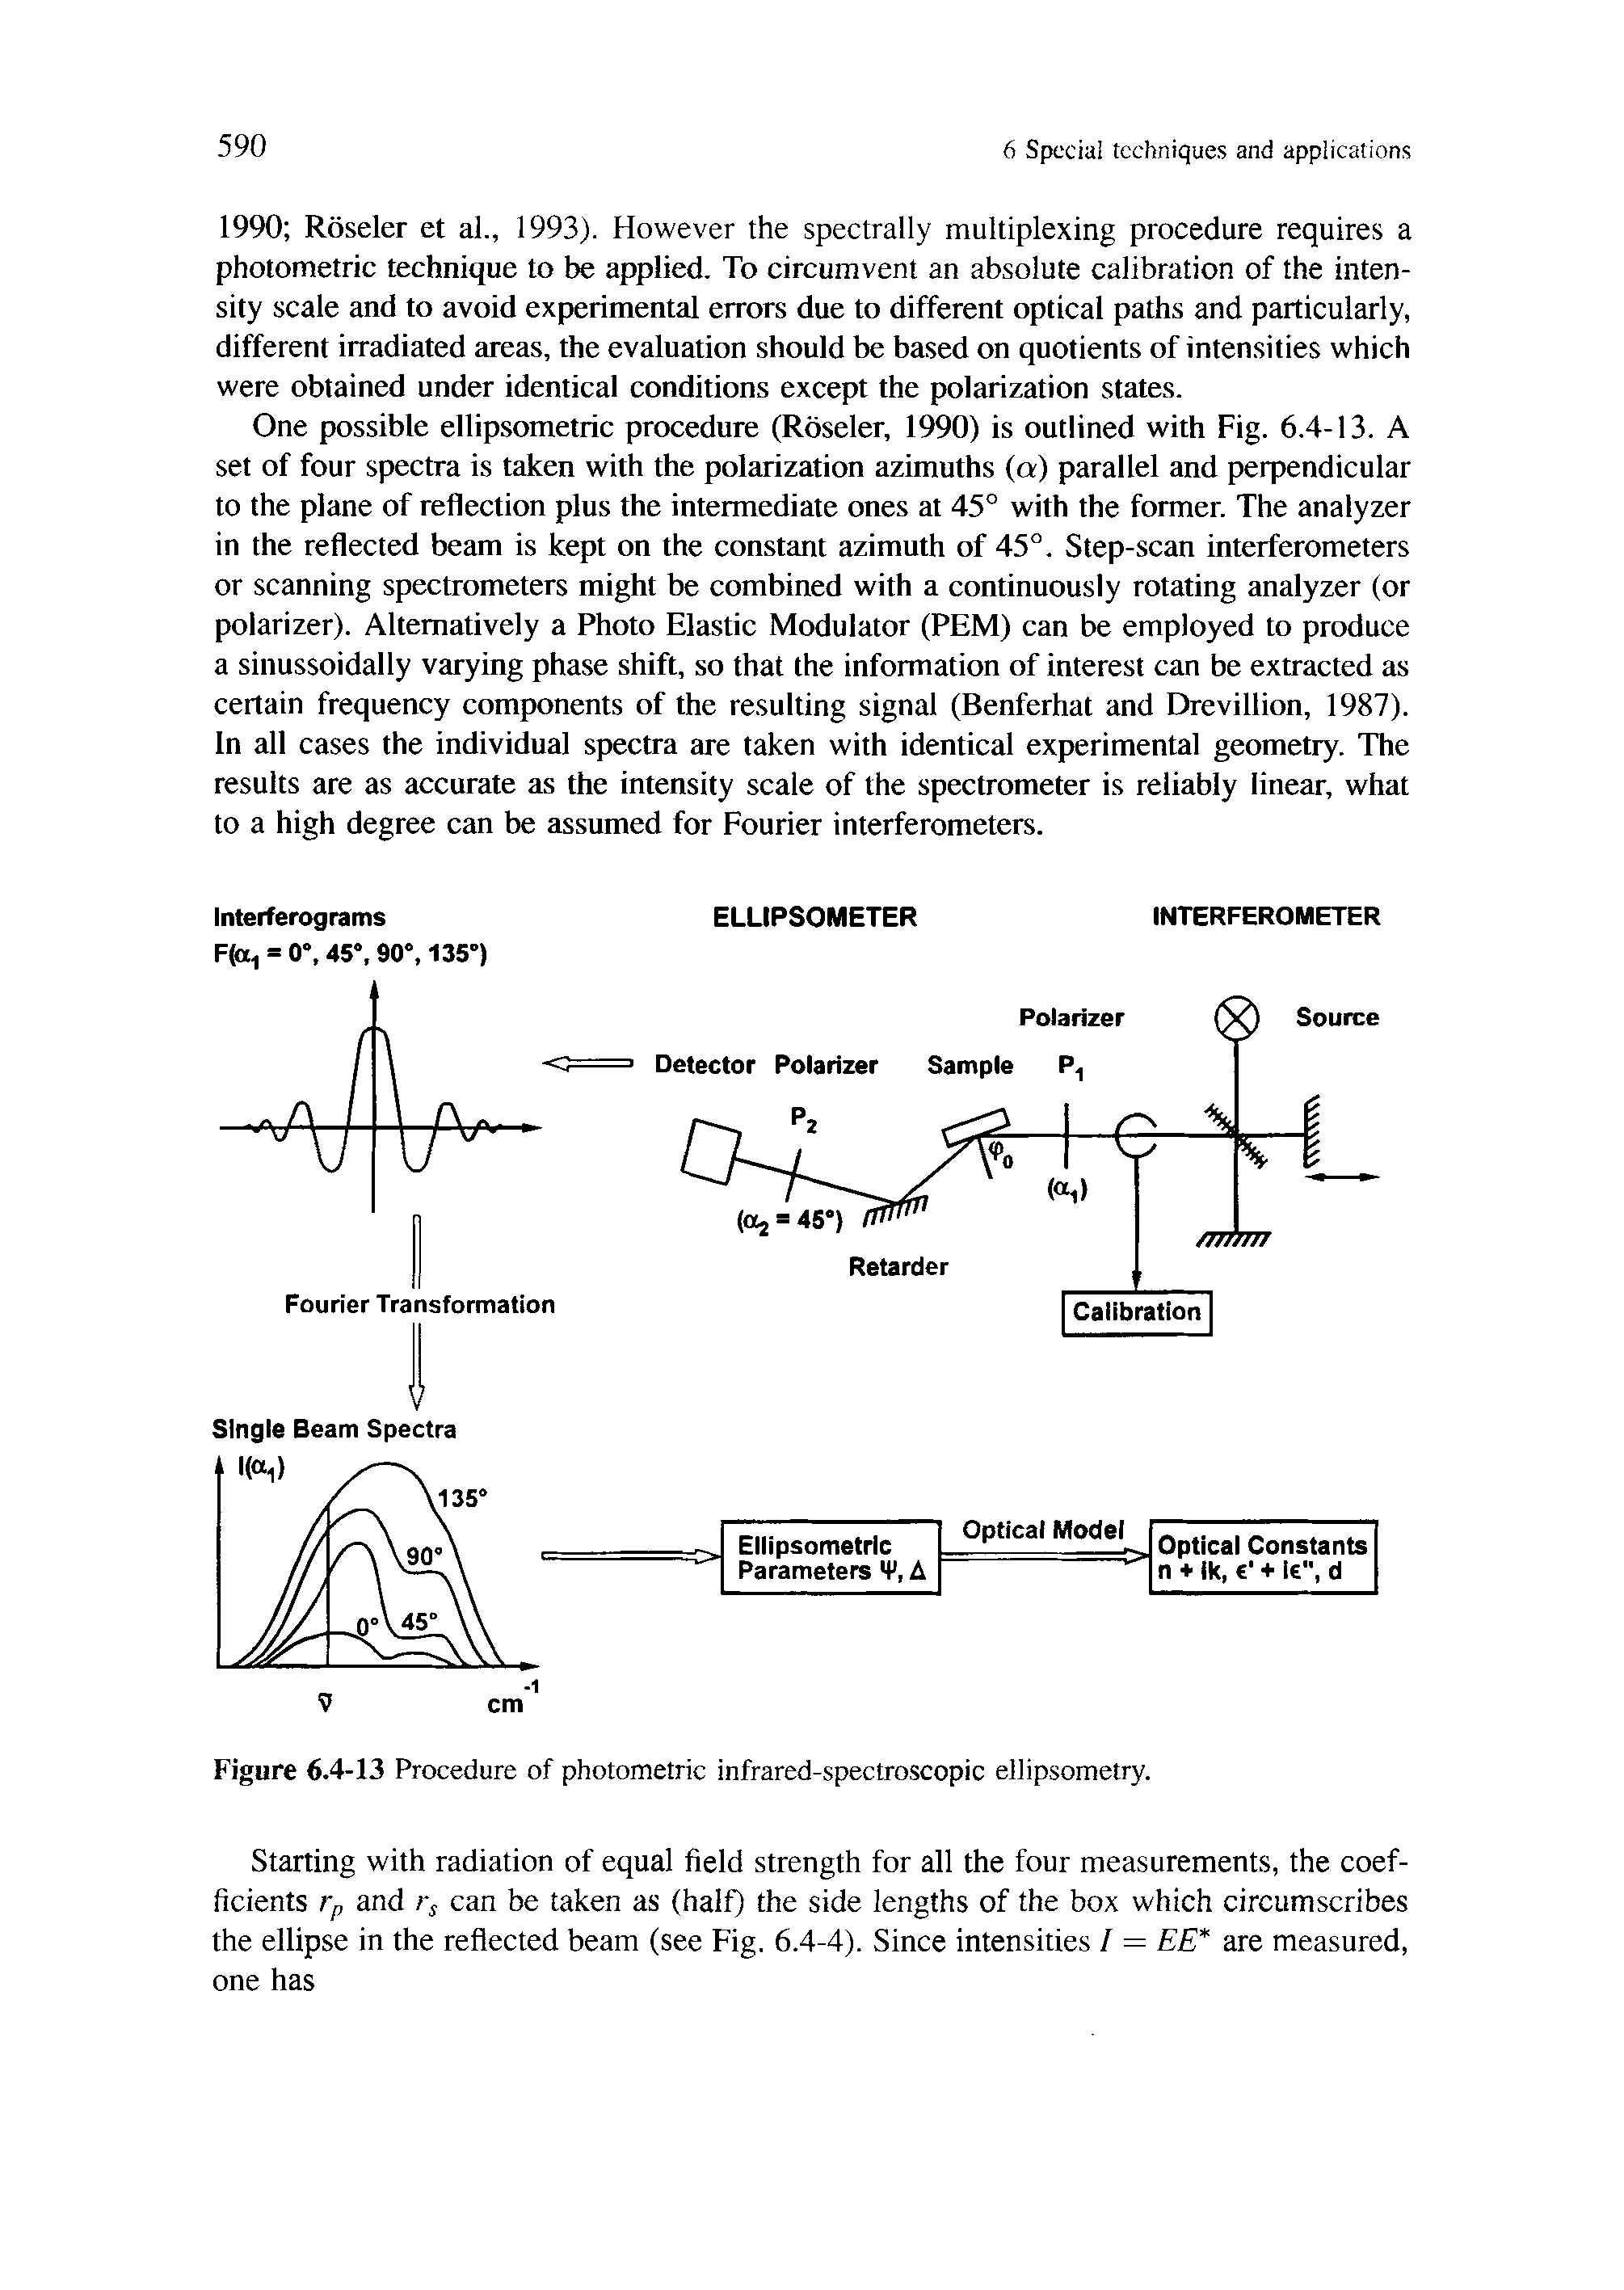 Figure 6.4-13 Procedure of photometric infrared-spectroscopic ellipsometry.